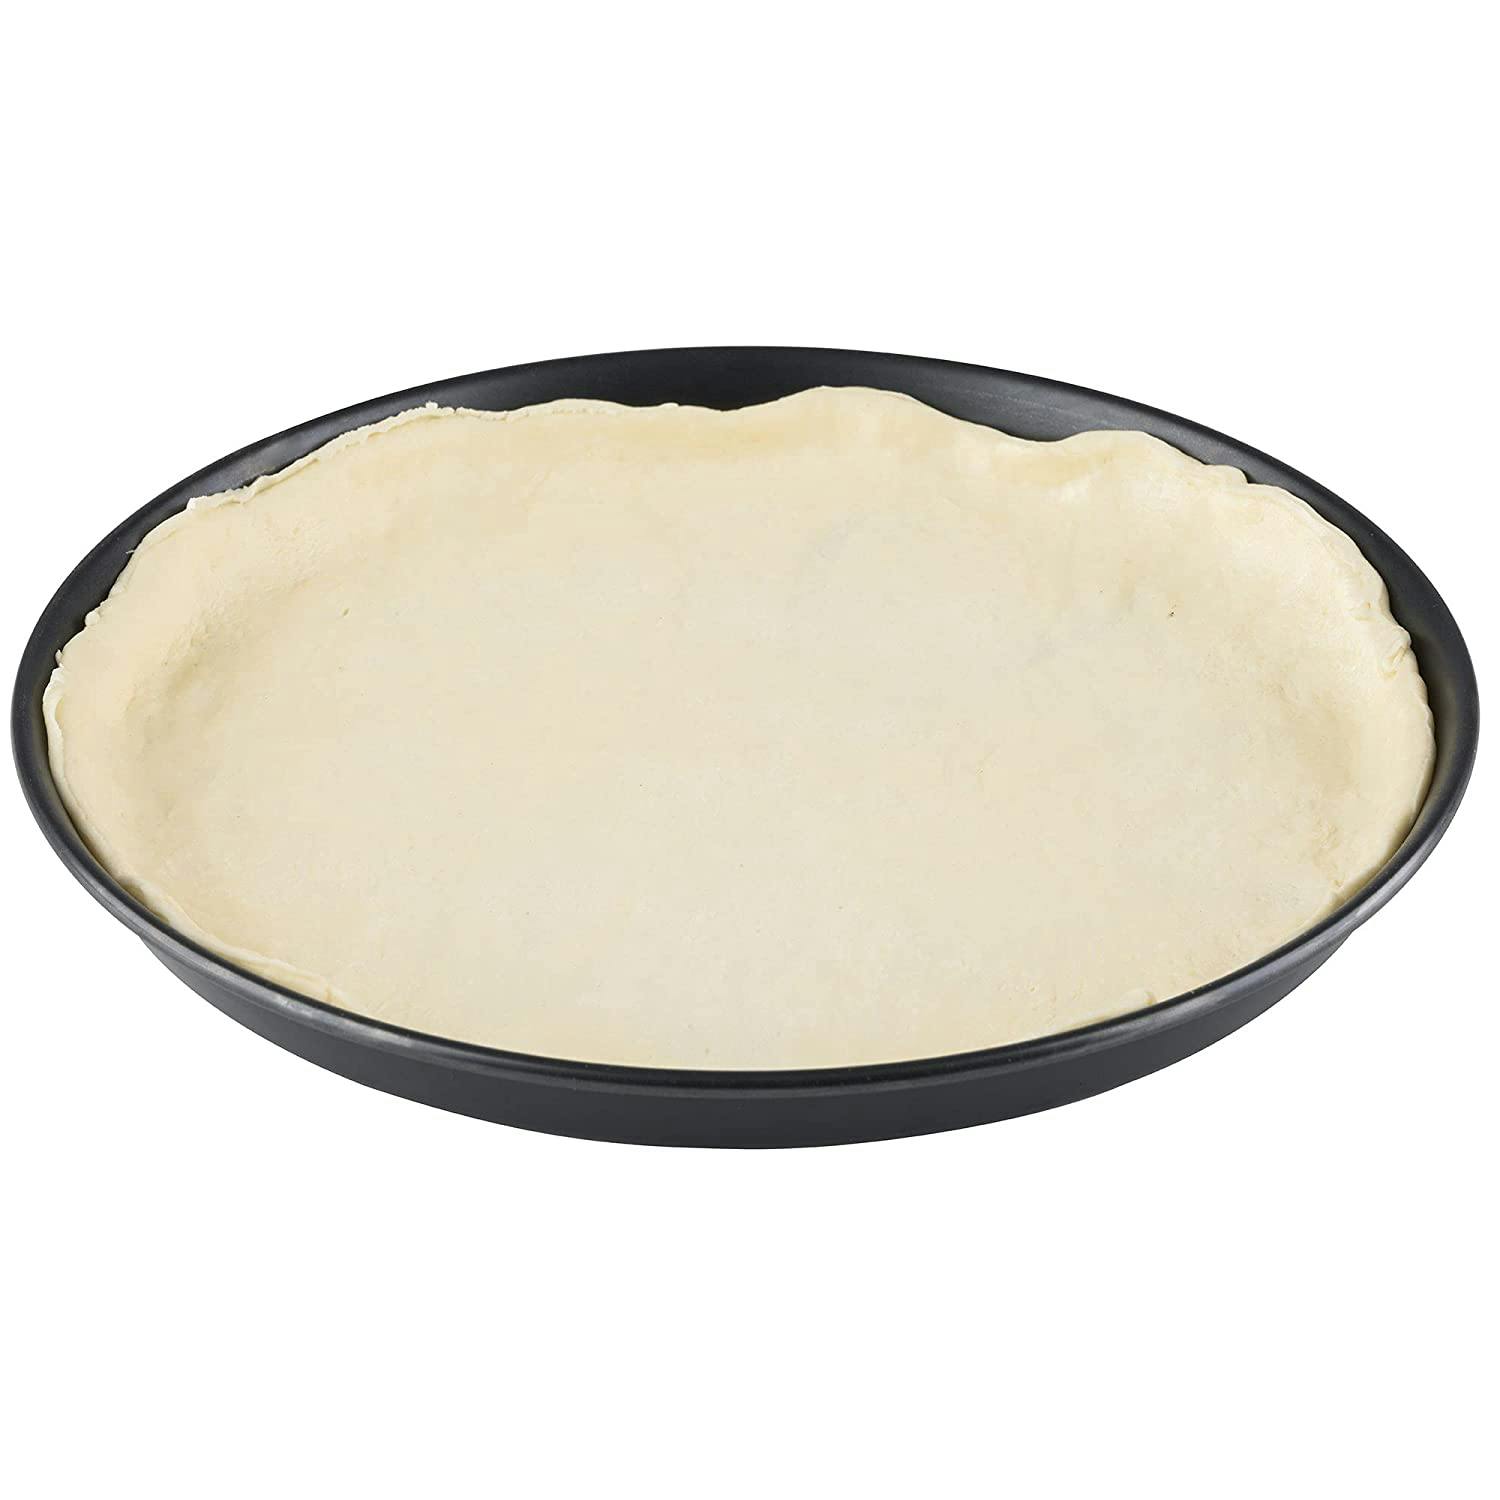 30 Stück Blaublech Profi Pizzablech Pizzaform Ofenform rund Ø 36 cm Gastlando 